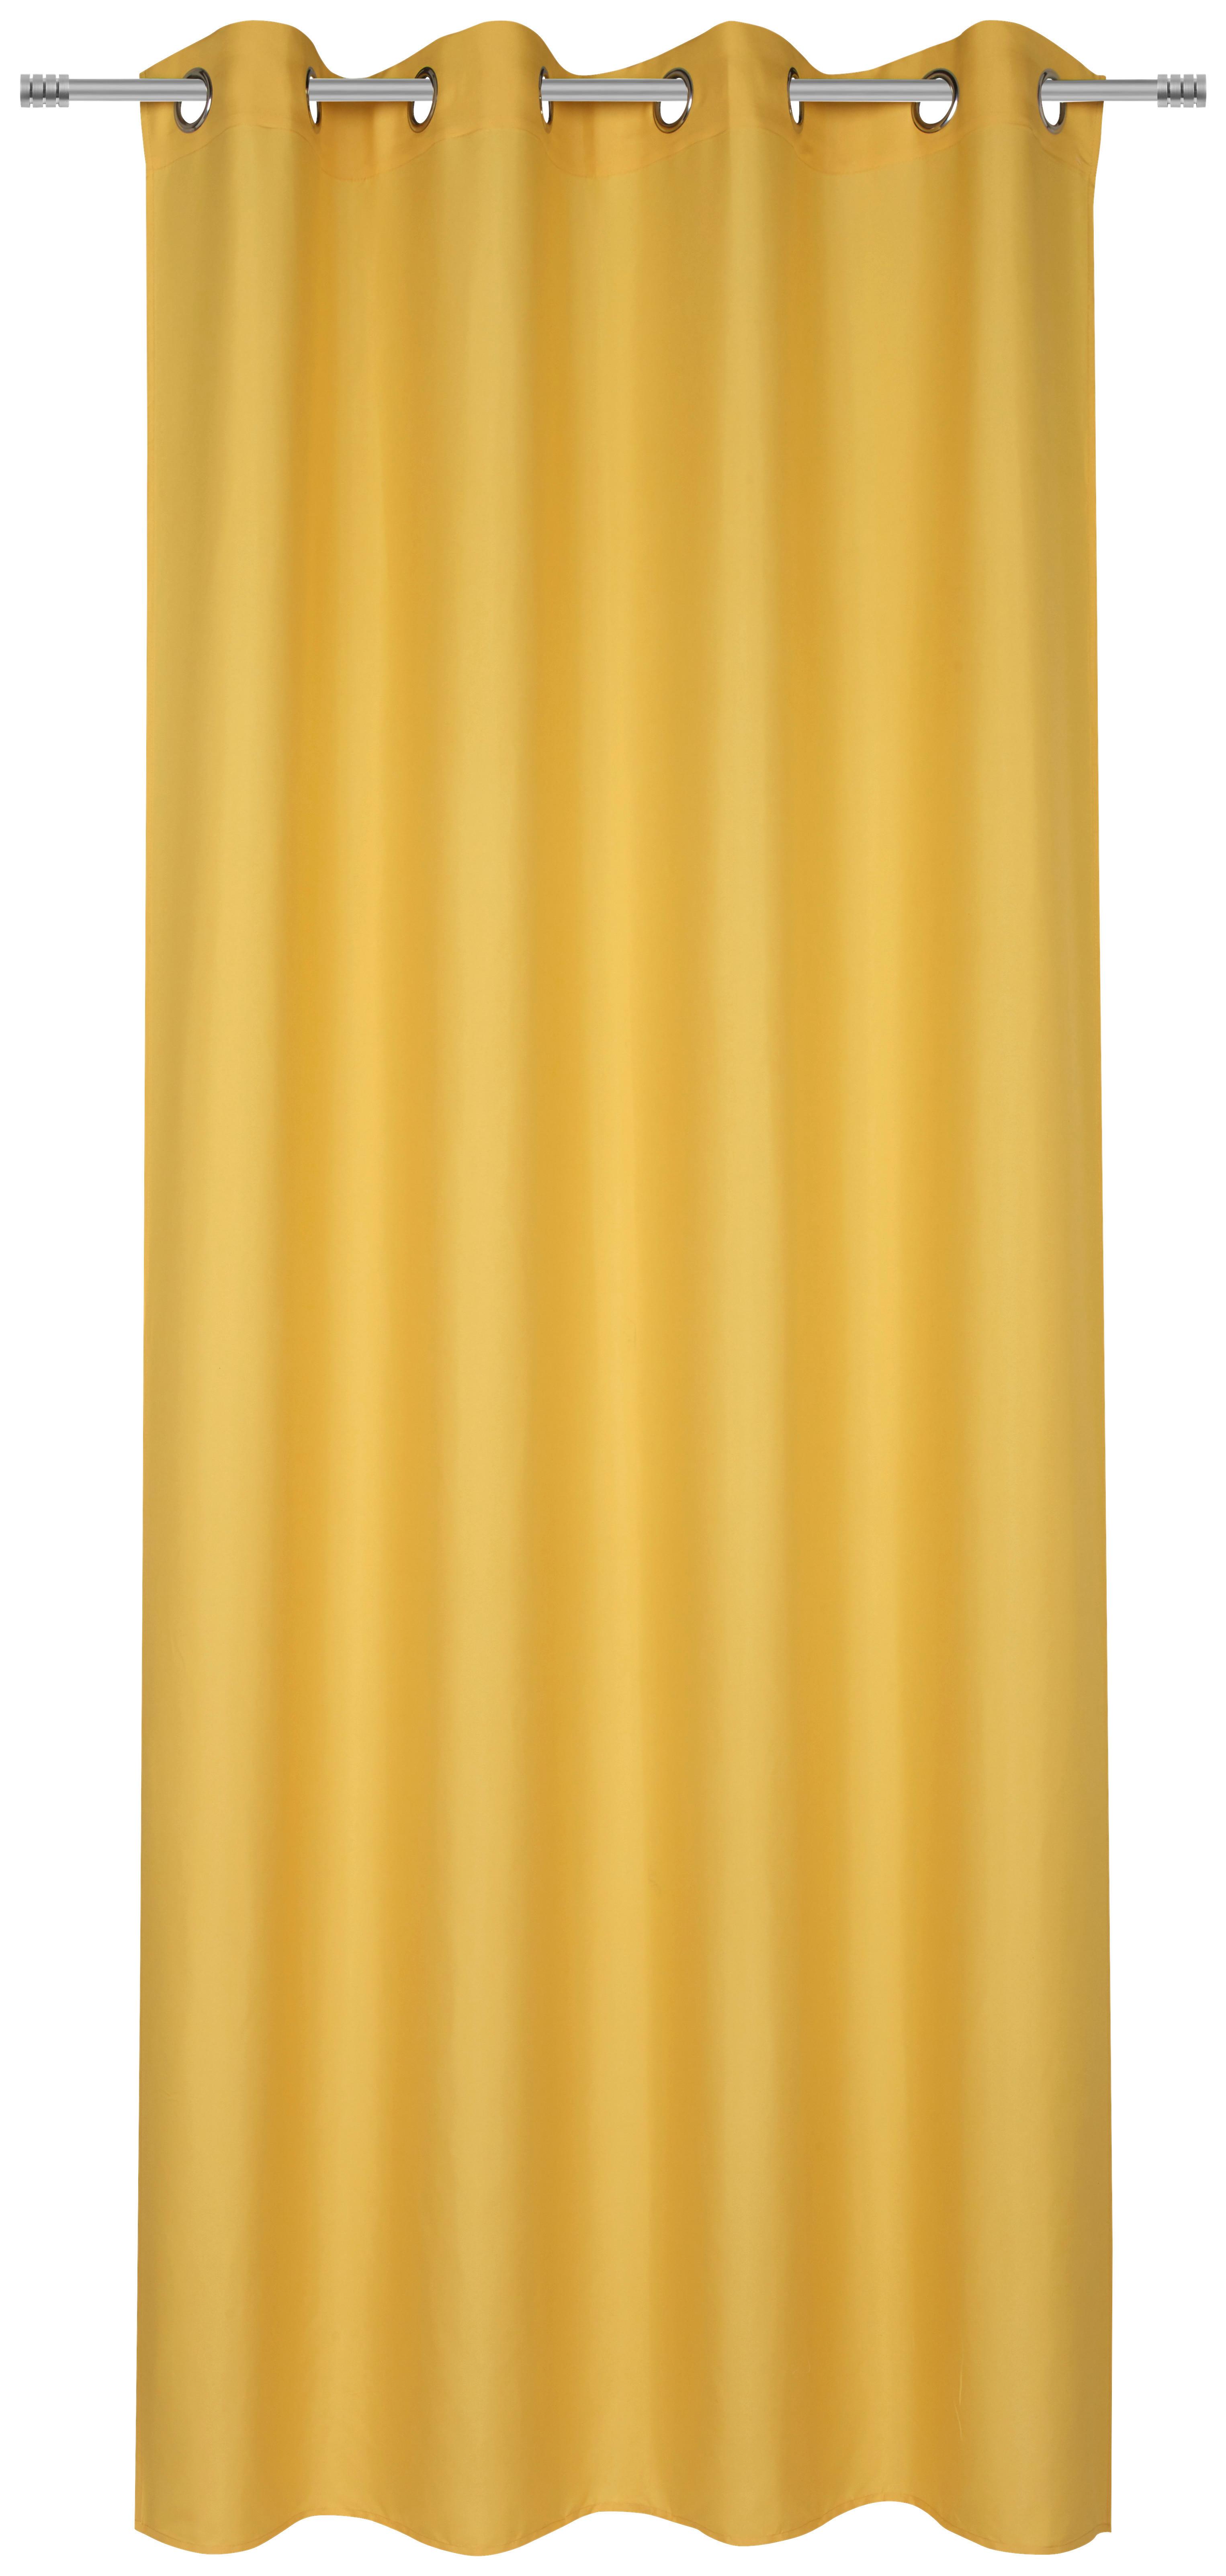 Ösenvorhang Abby in Gelb ca. 140x235cm - Gelb, KONVENTIONELL, Textil (140/235cm) - Modern Living